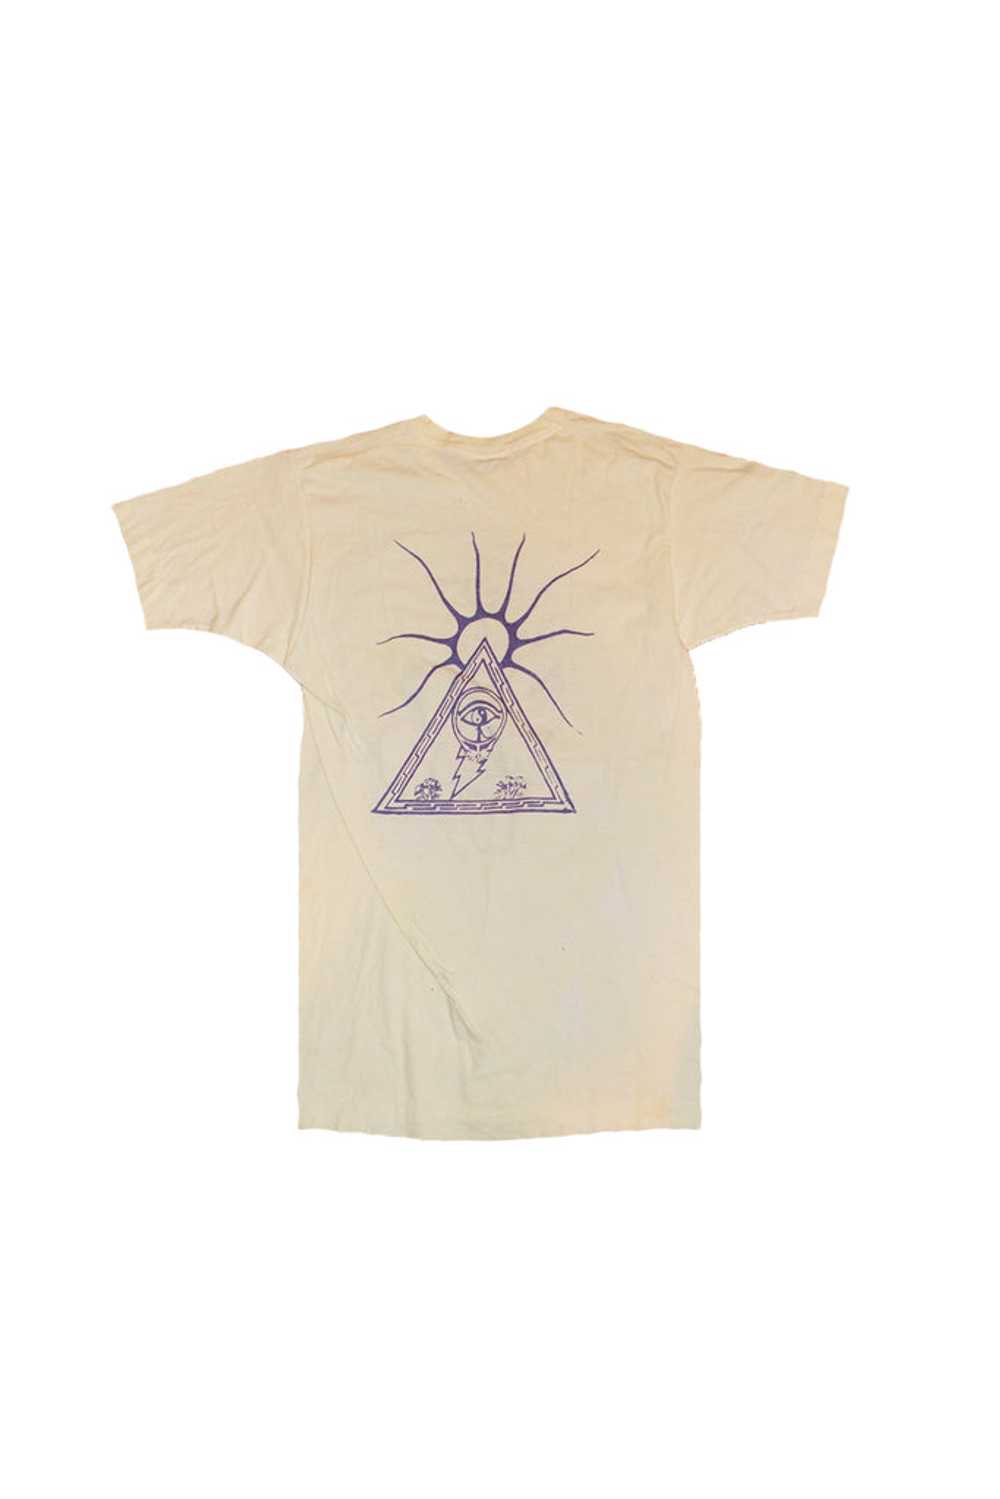 Vintage 80's Grateful Dead T-Shirt - image 4